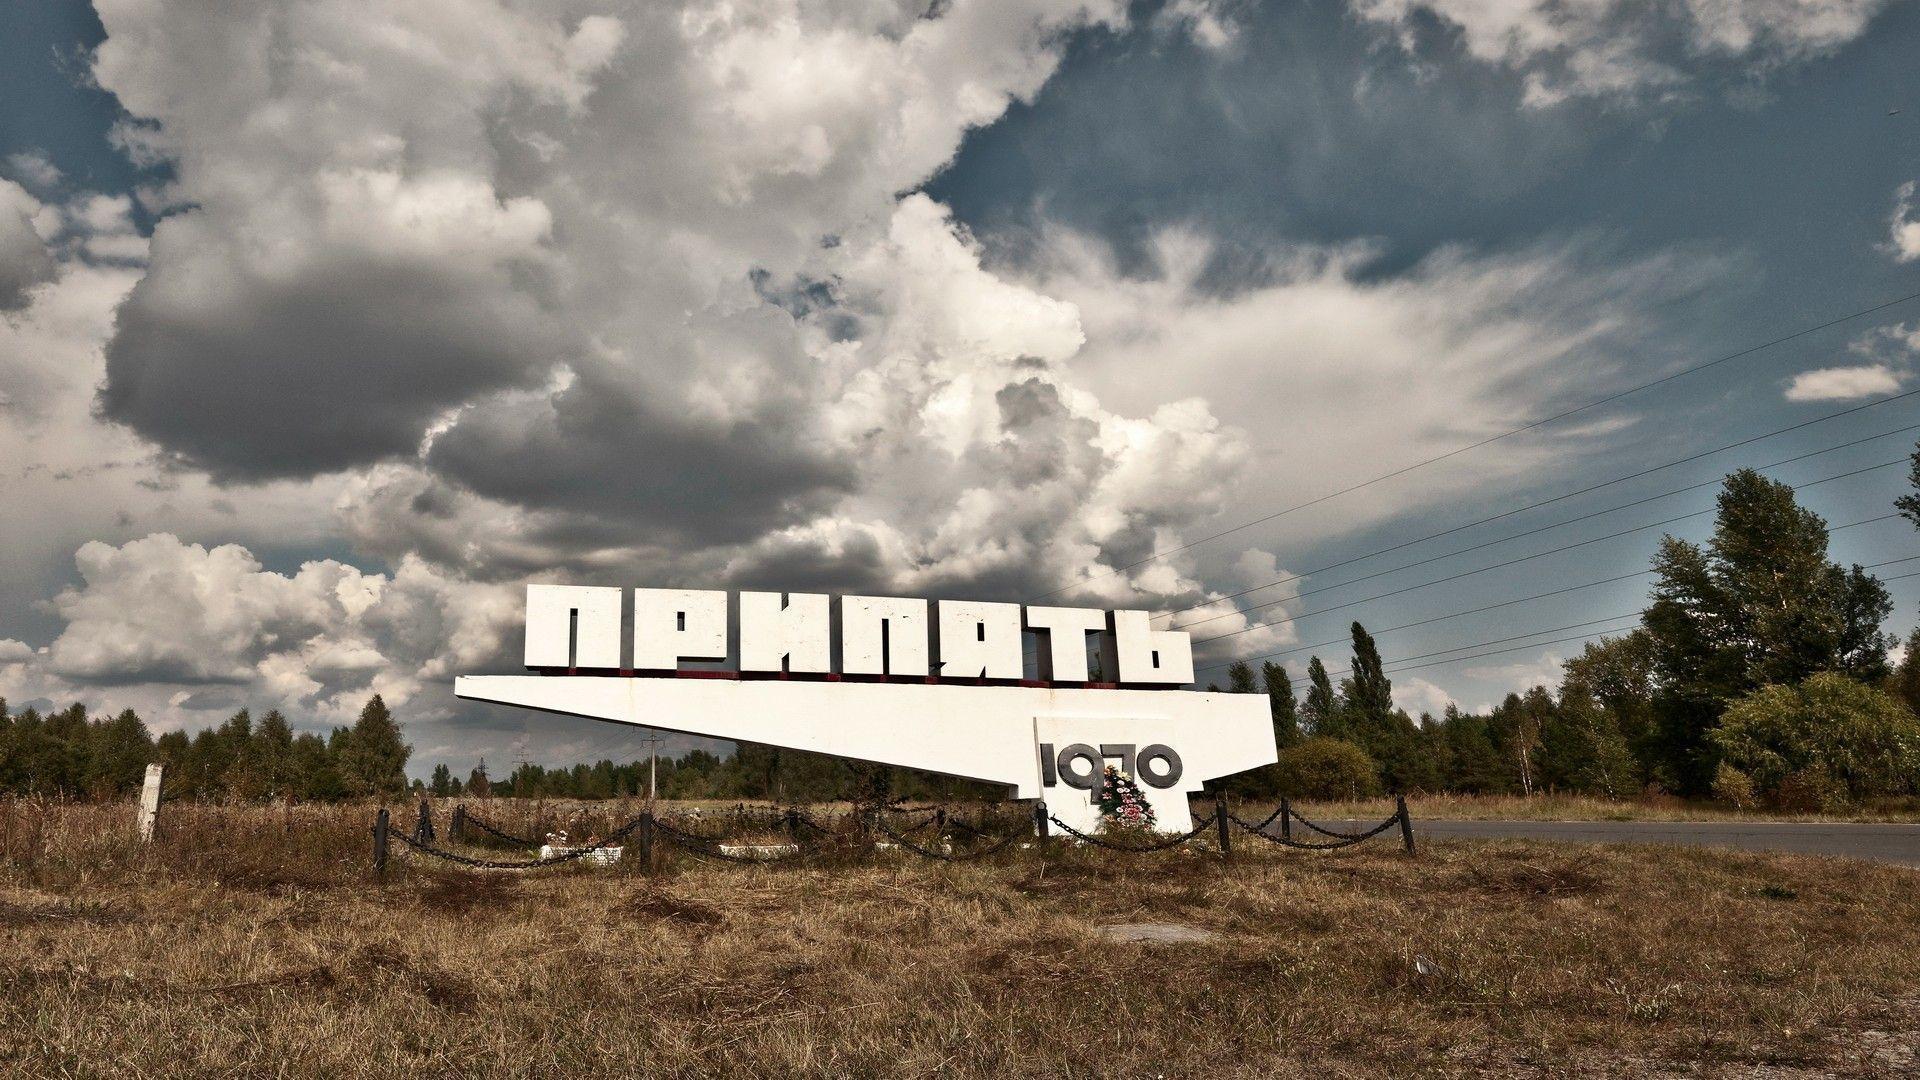 General 1920x1080 nature landscape architecture Pripyat abandoned Cyrillic road sign clouds fence 1970 (Year) Ukraine